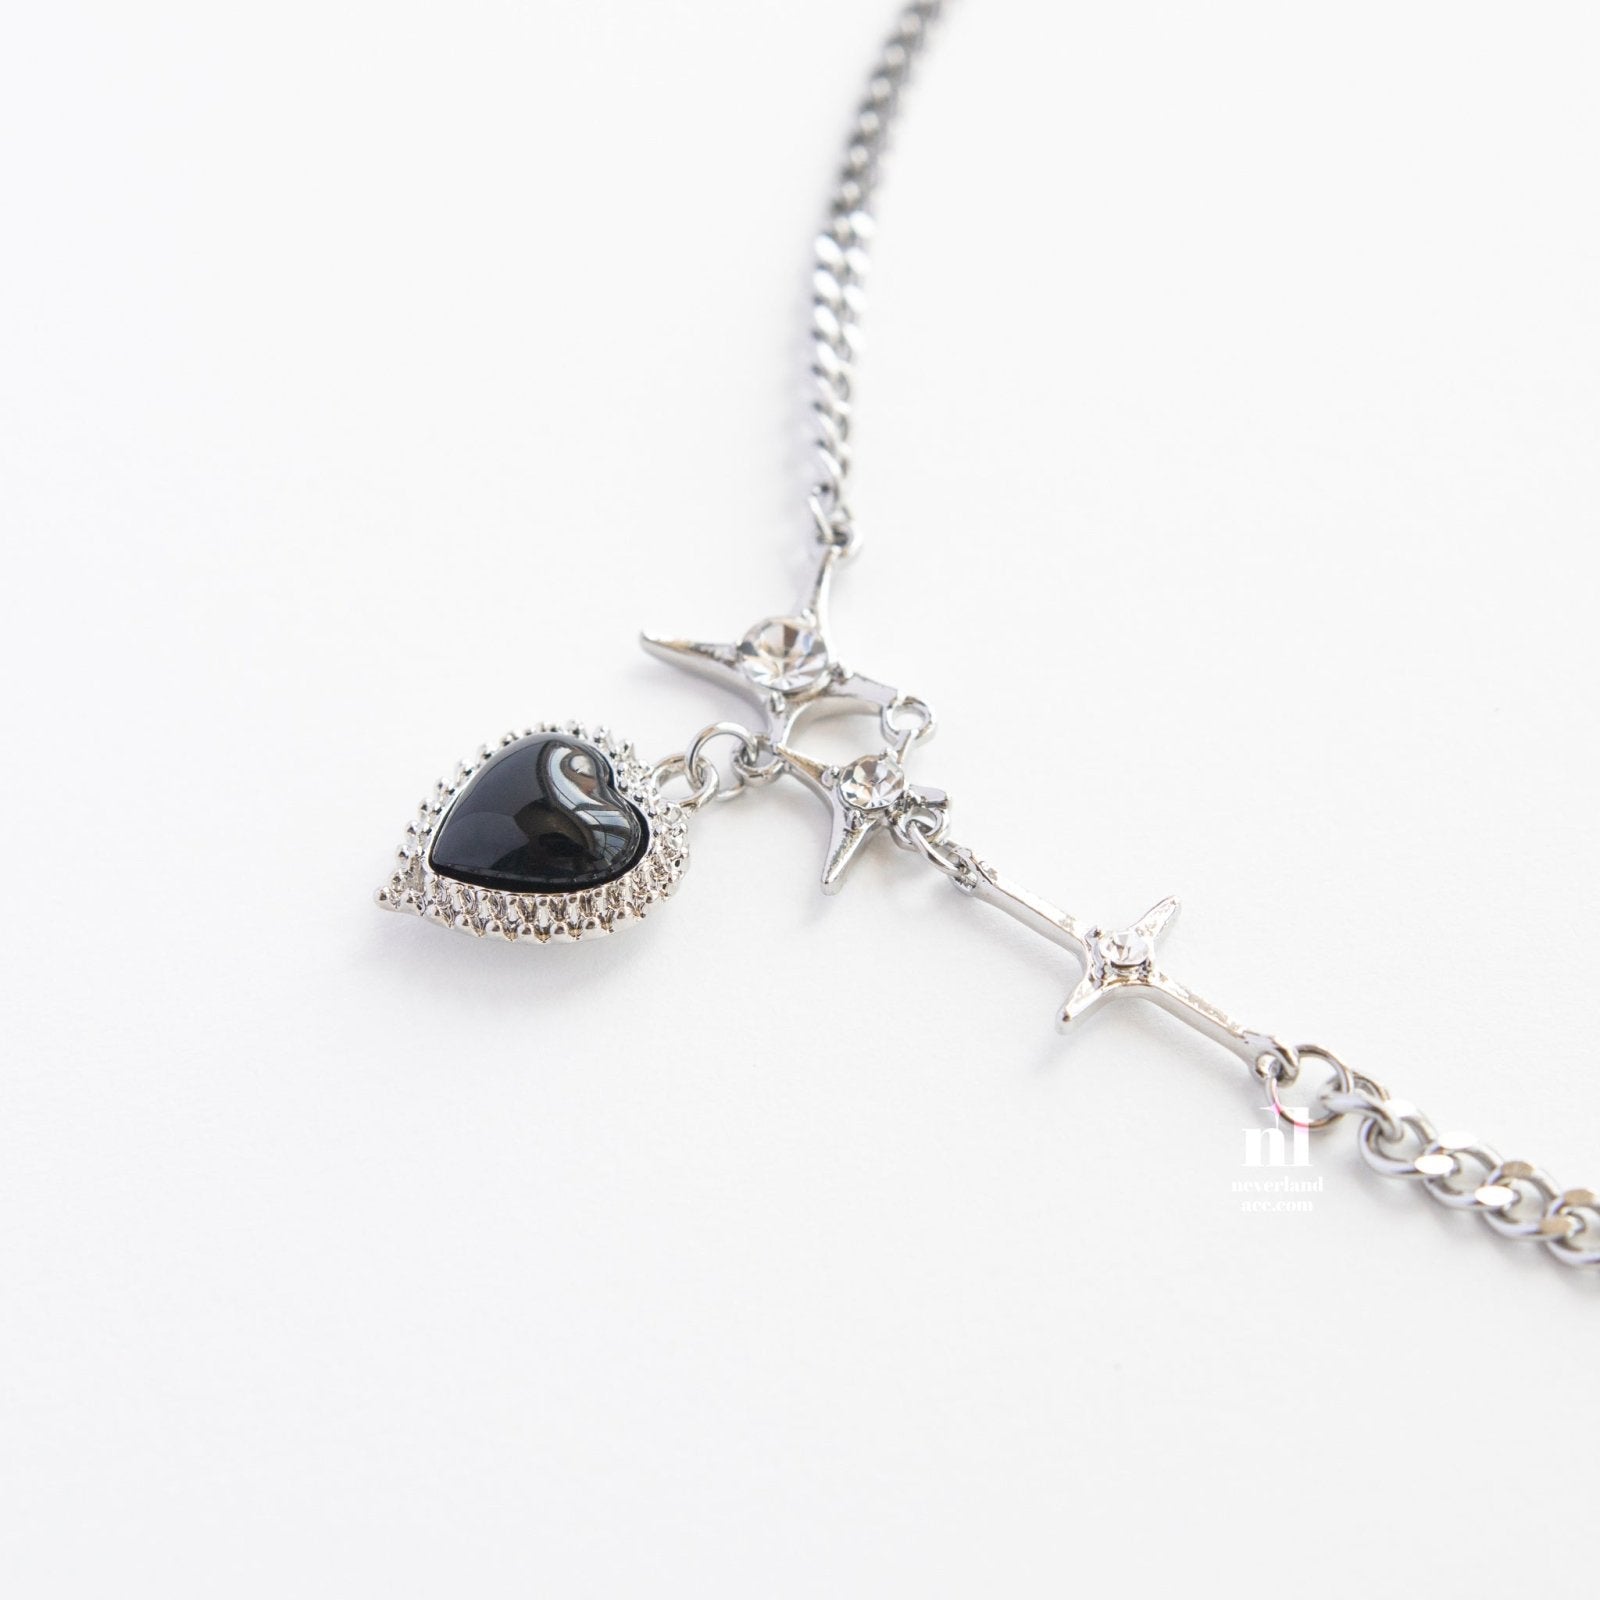 Black Heart Pendant Chain Necklace - neverland accessories